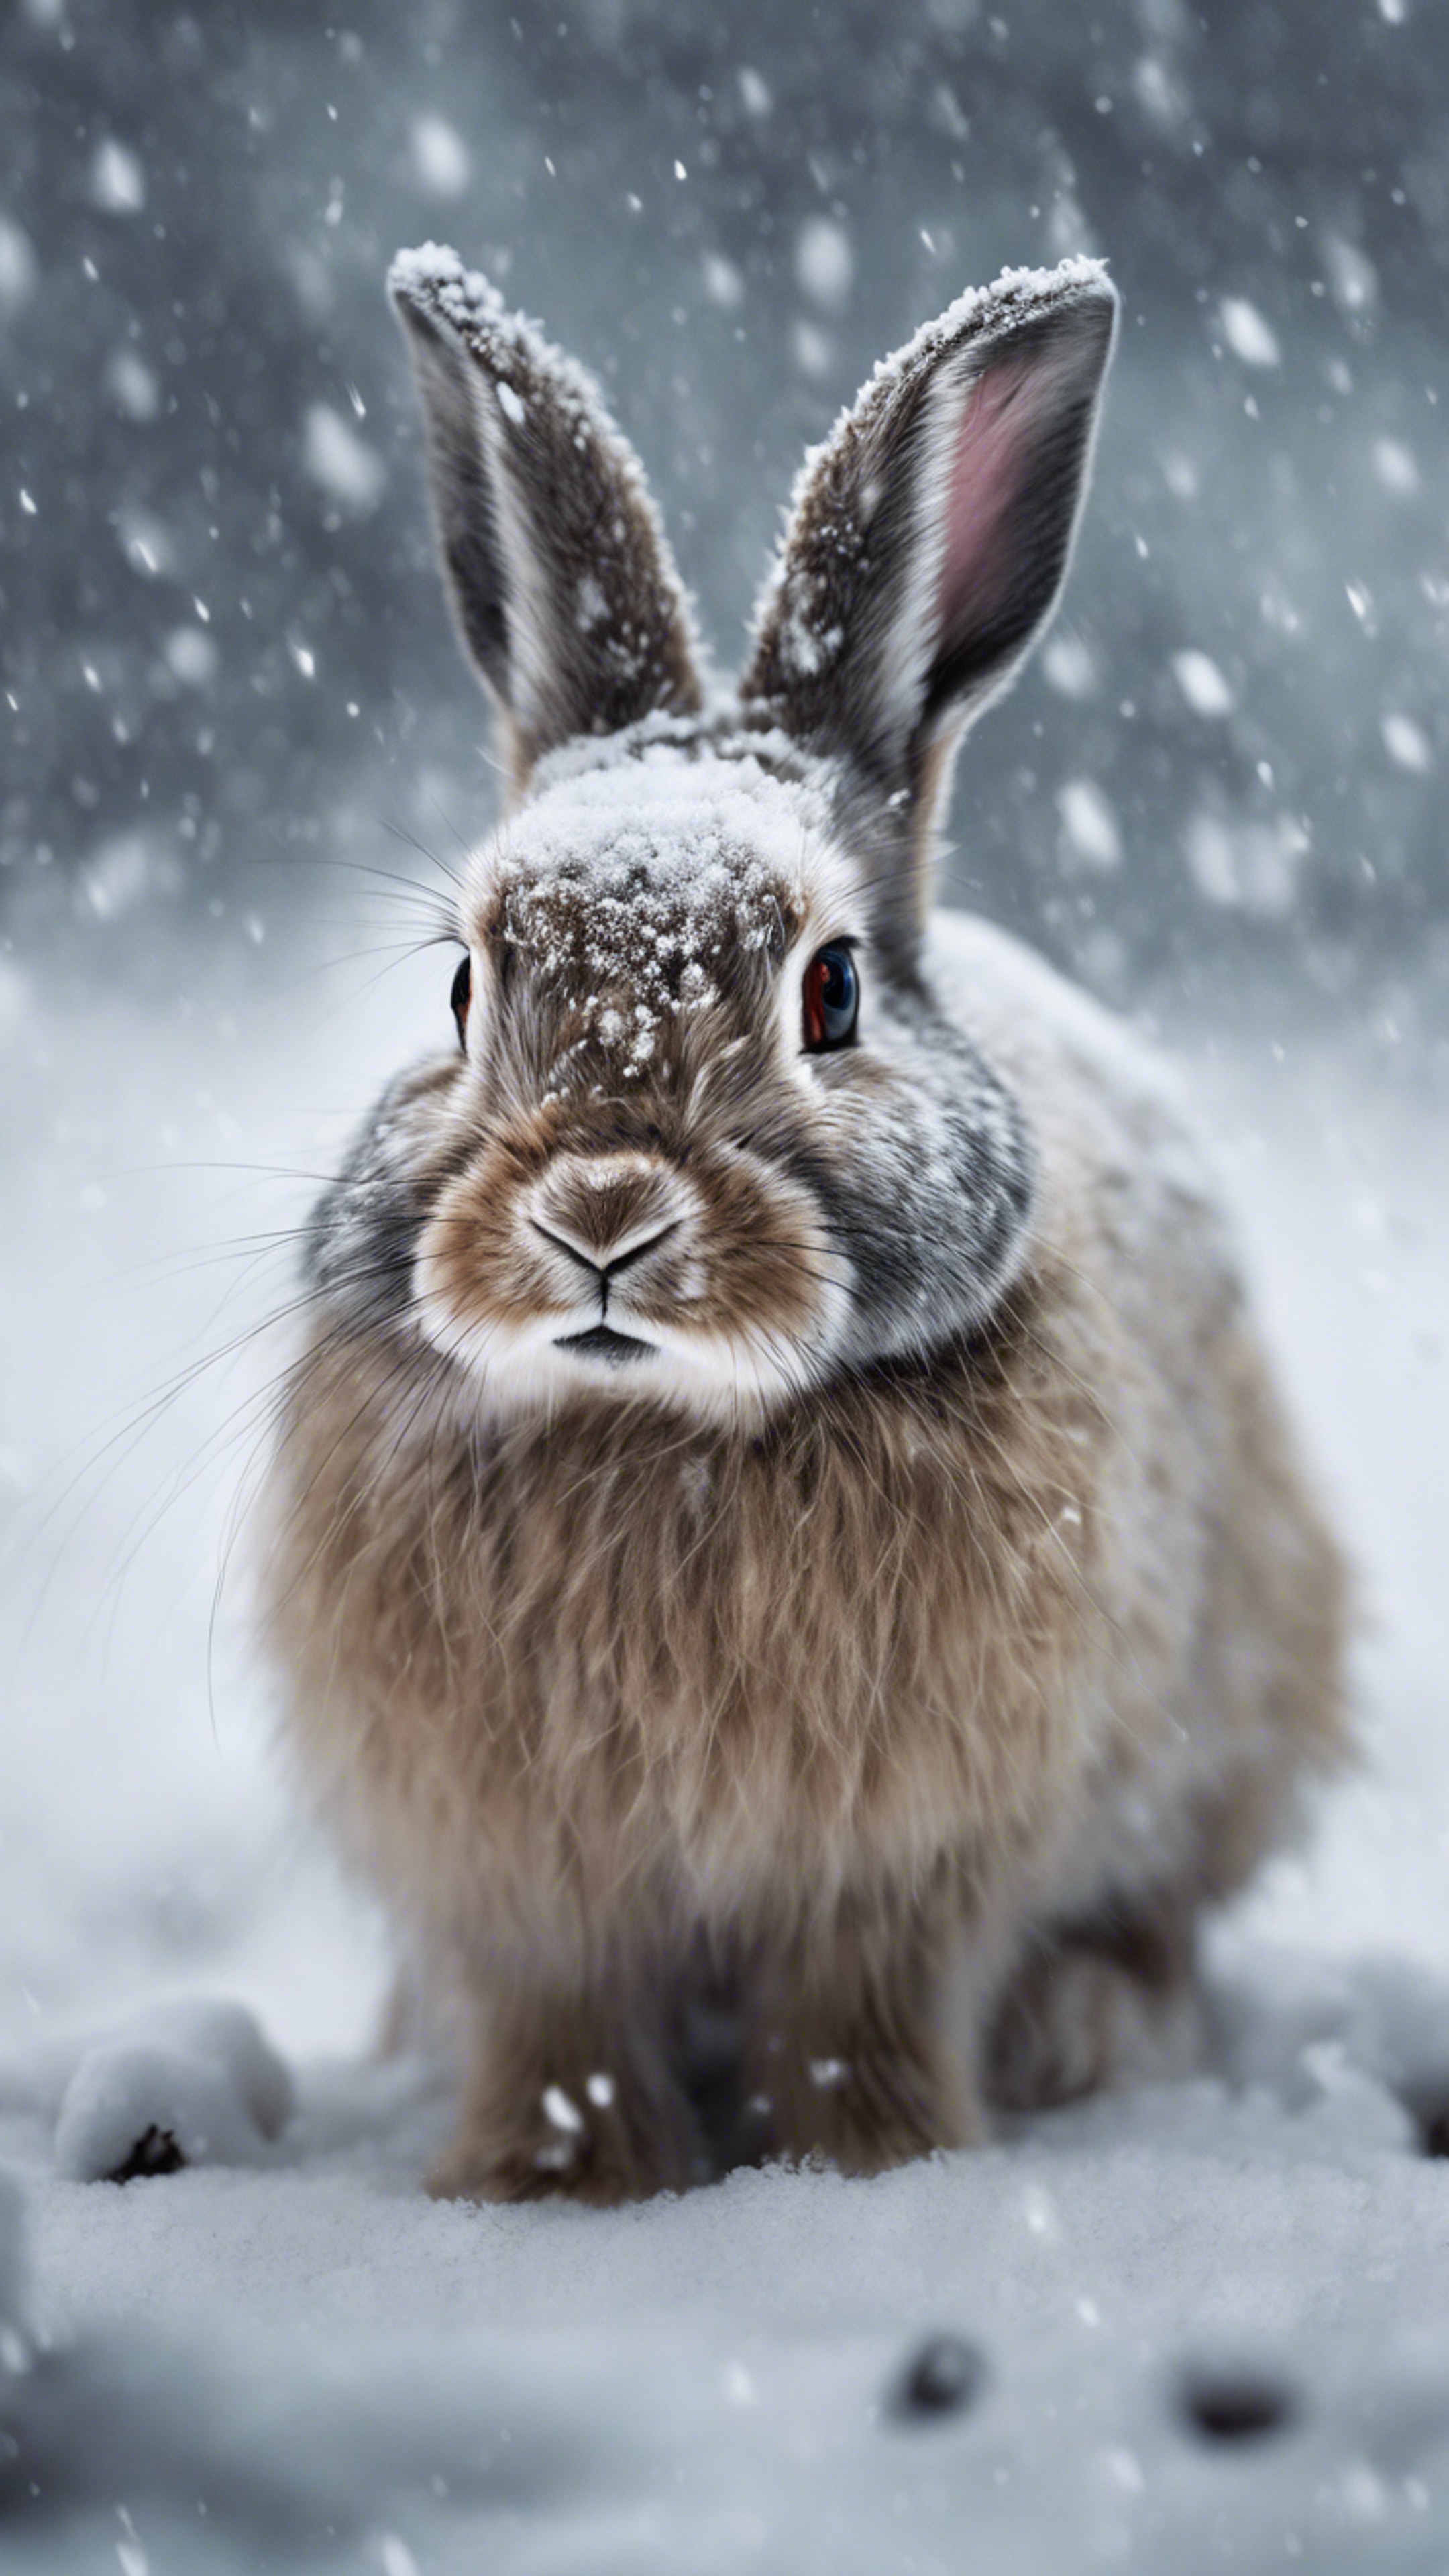 An Arctic rabbit braving a blizzard, its fur blending in with the snow. ផ្ទាំង​រូបភាព[f8597e39ec4d4470ac43]